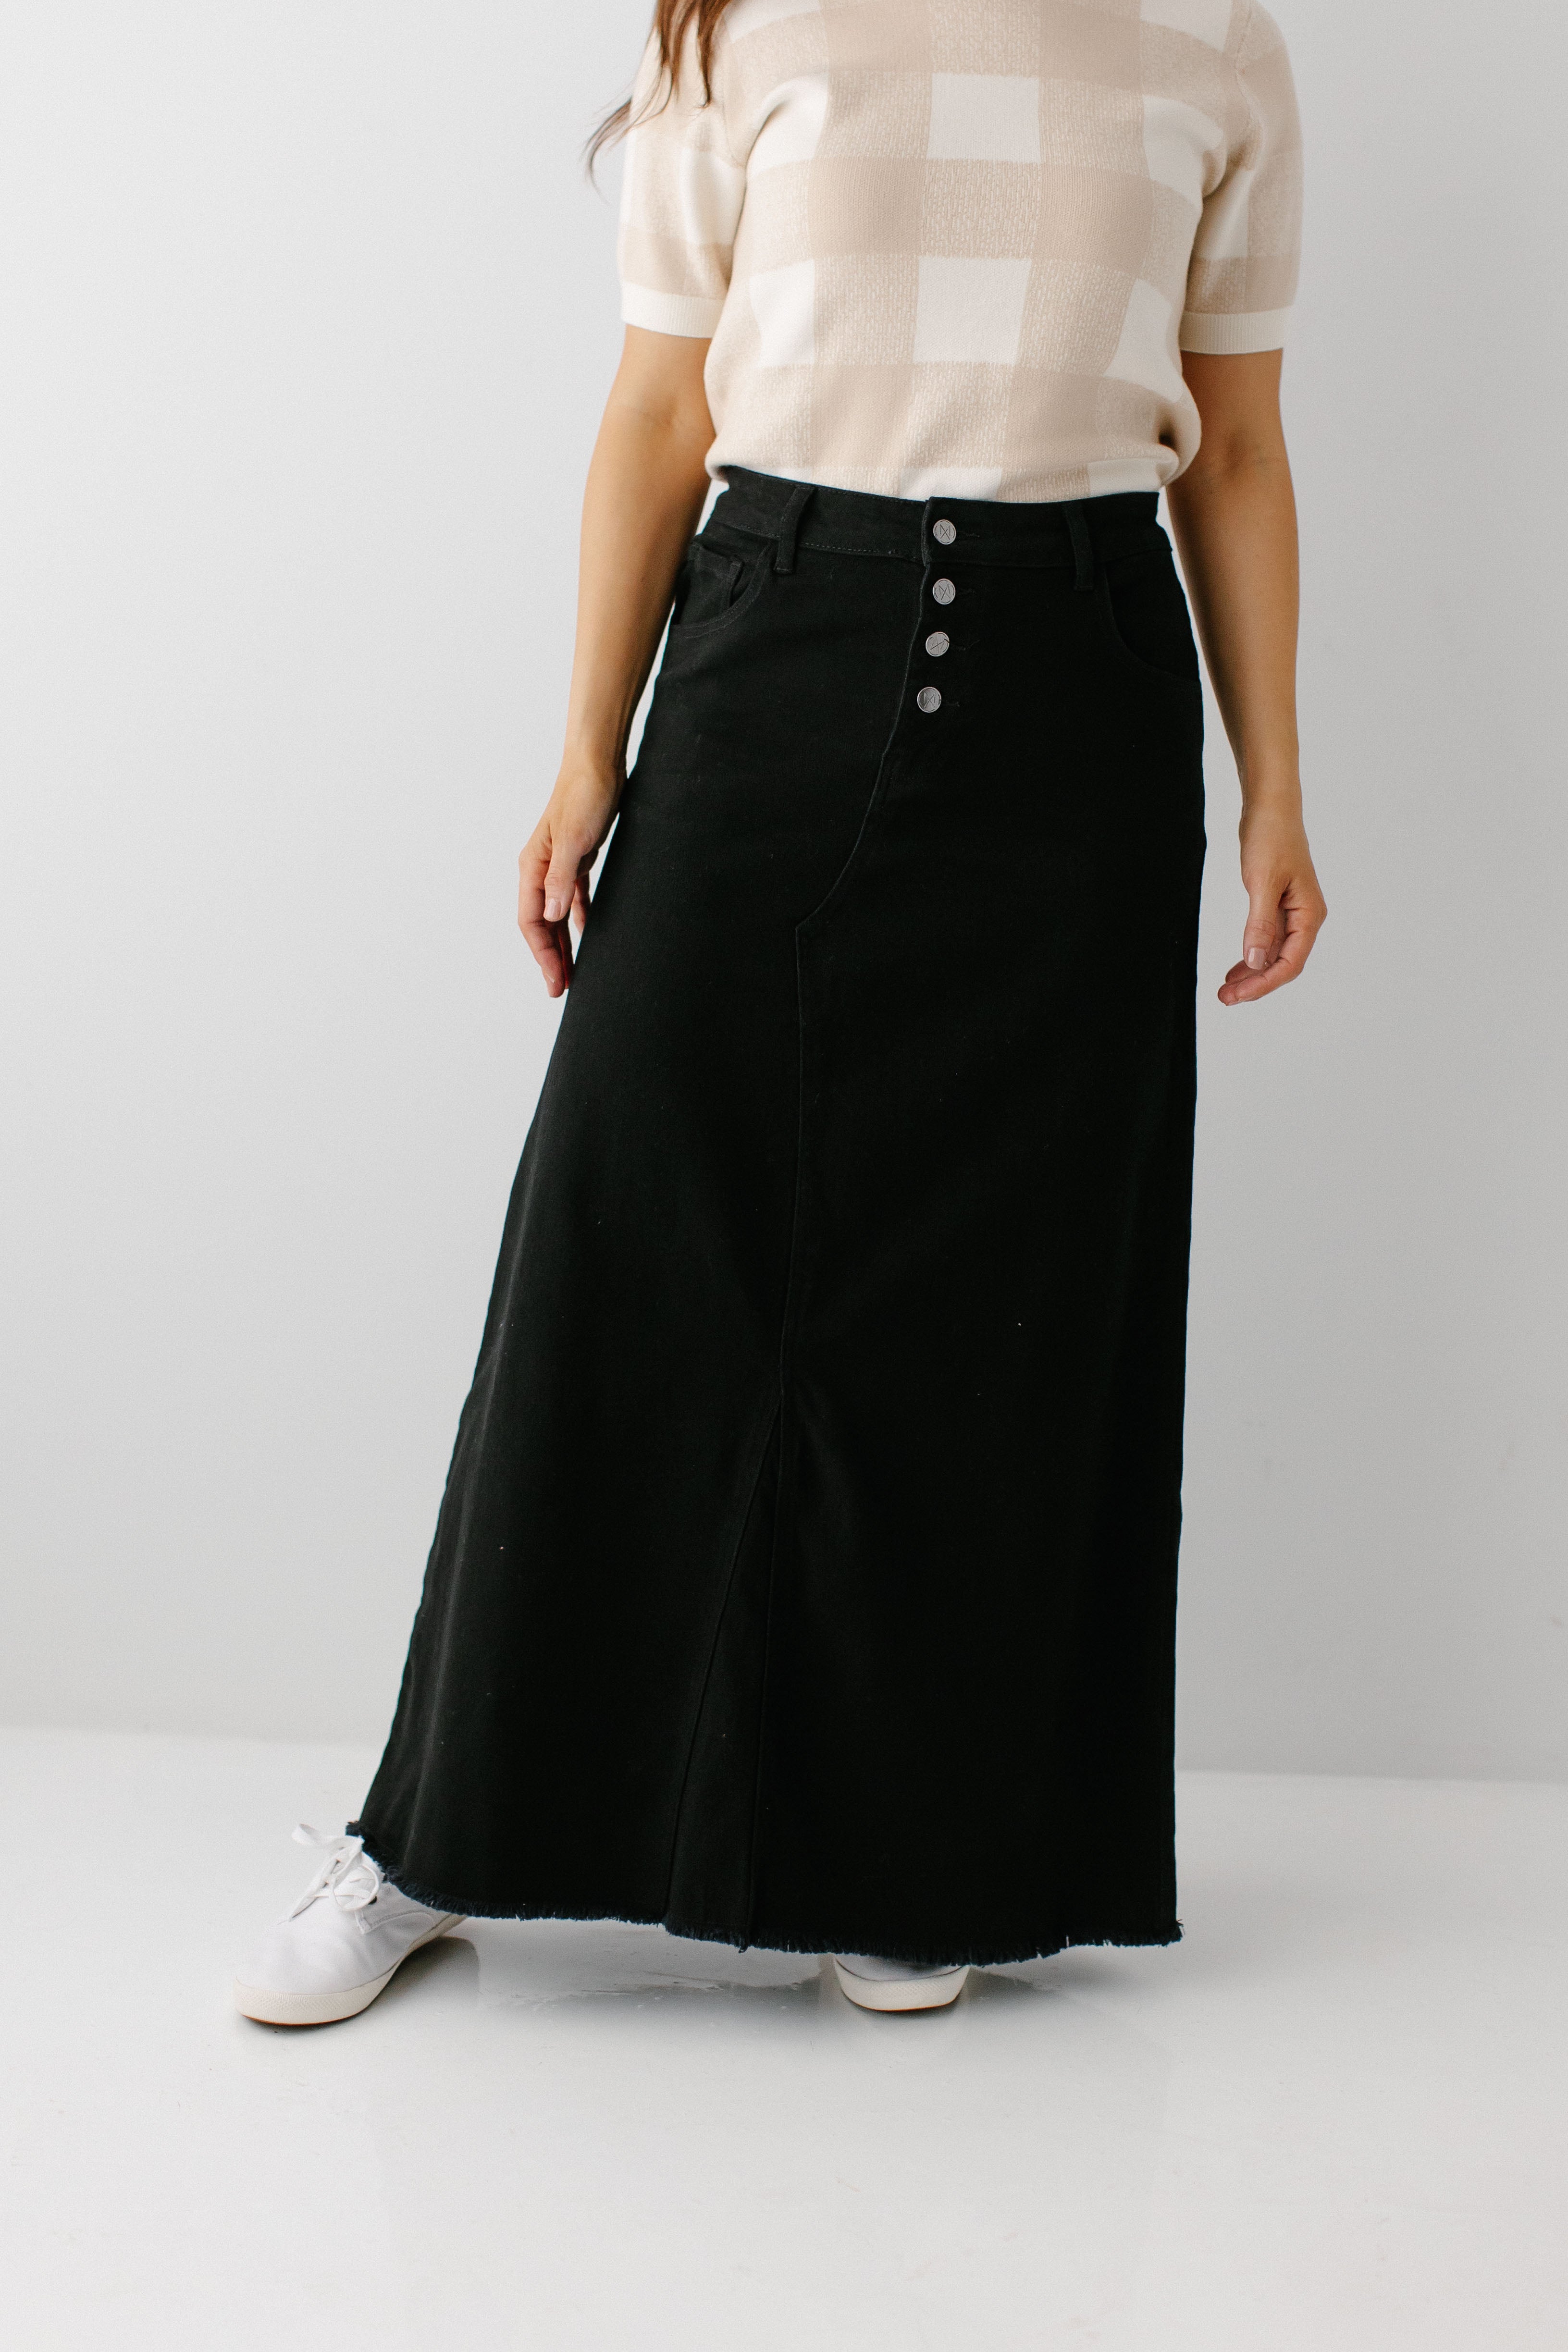 Denim Mini Skirt Throwback Style - wit & whimsy